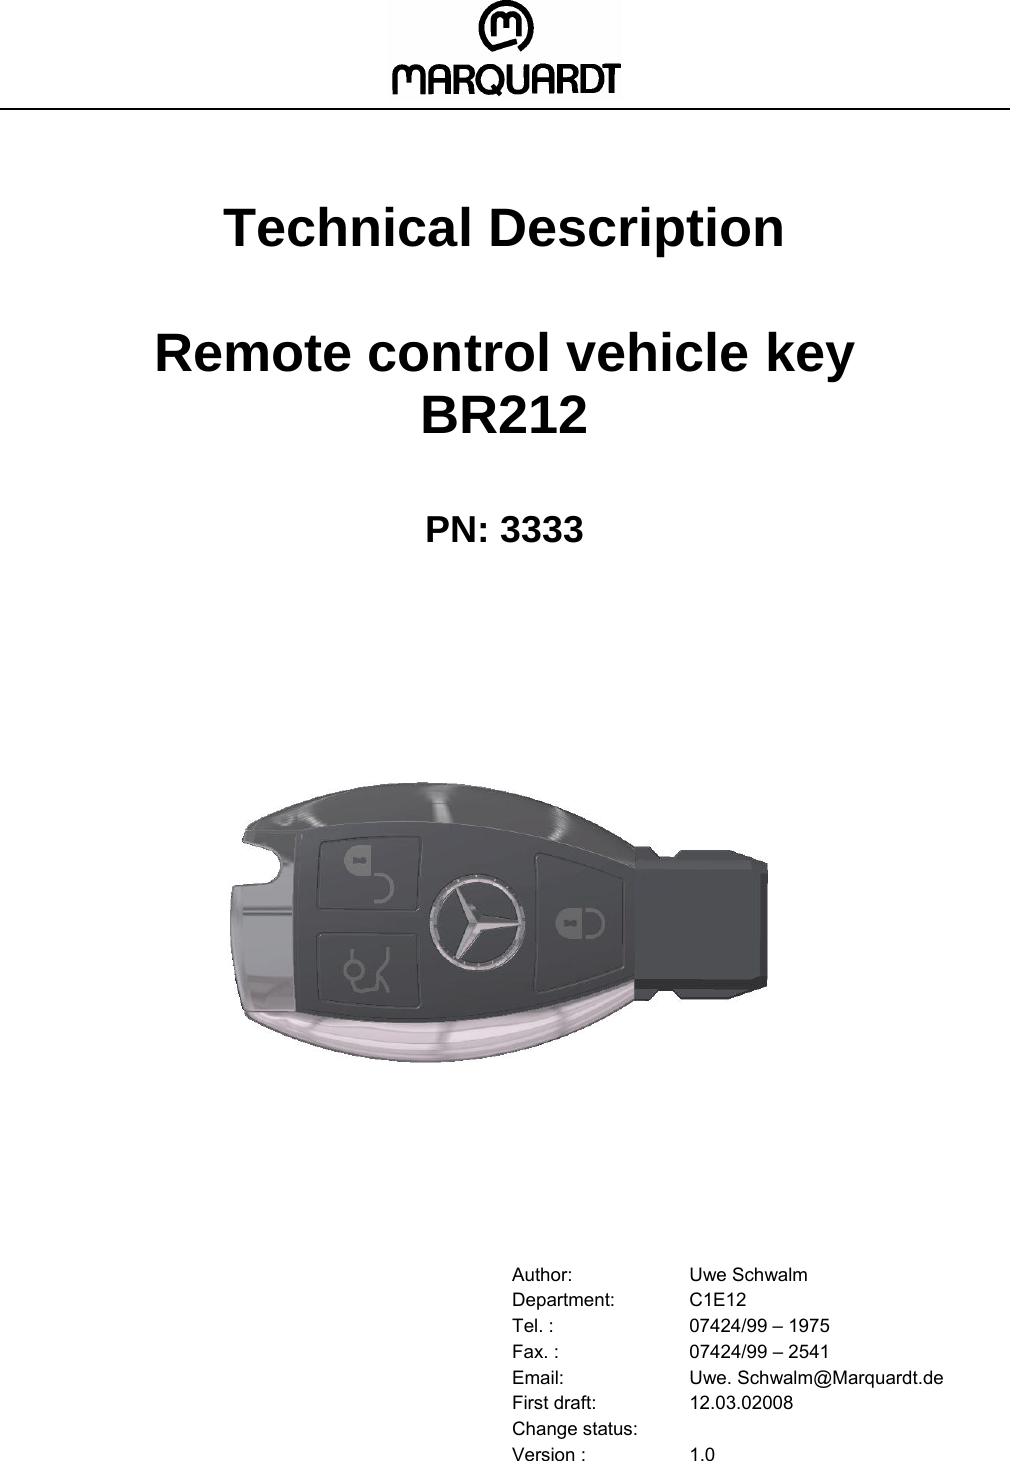    Technical Description  Remote control vehicle key  BR212  PN: 3333                             Author: Uwe Schwalm Department: C1E12 Tel. :  07424/99 – 1975 Fax. :  07424/99 – 2541 Email: Uwe. Schwalm@Marquardt.de First draft:  12.03.02008 Change status:   Version :  1.0 